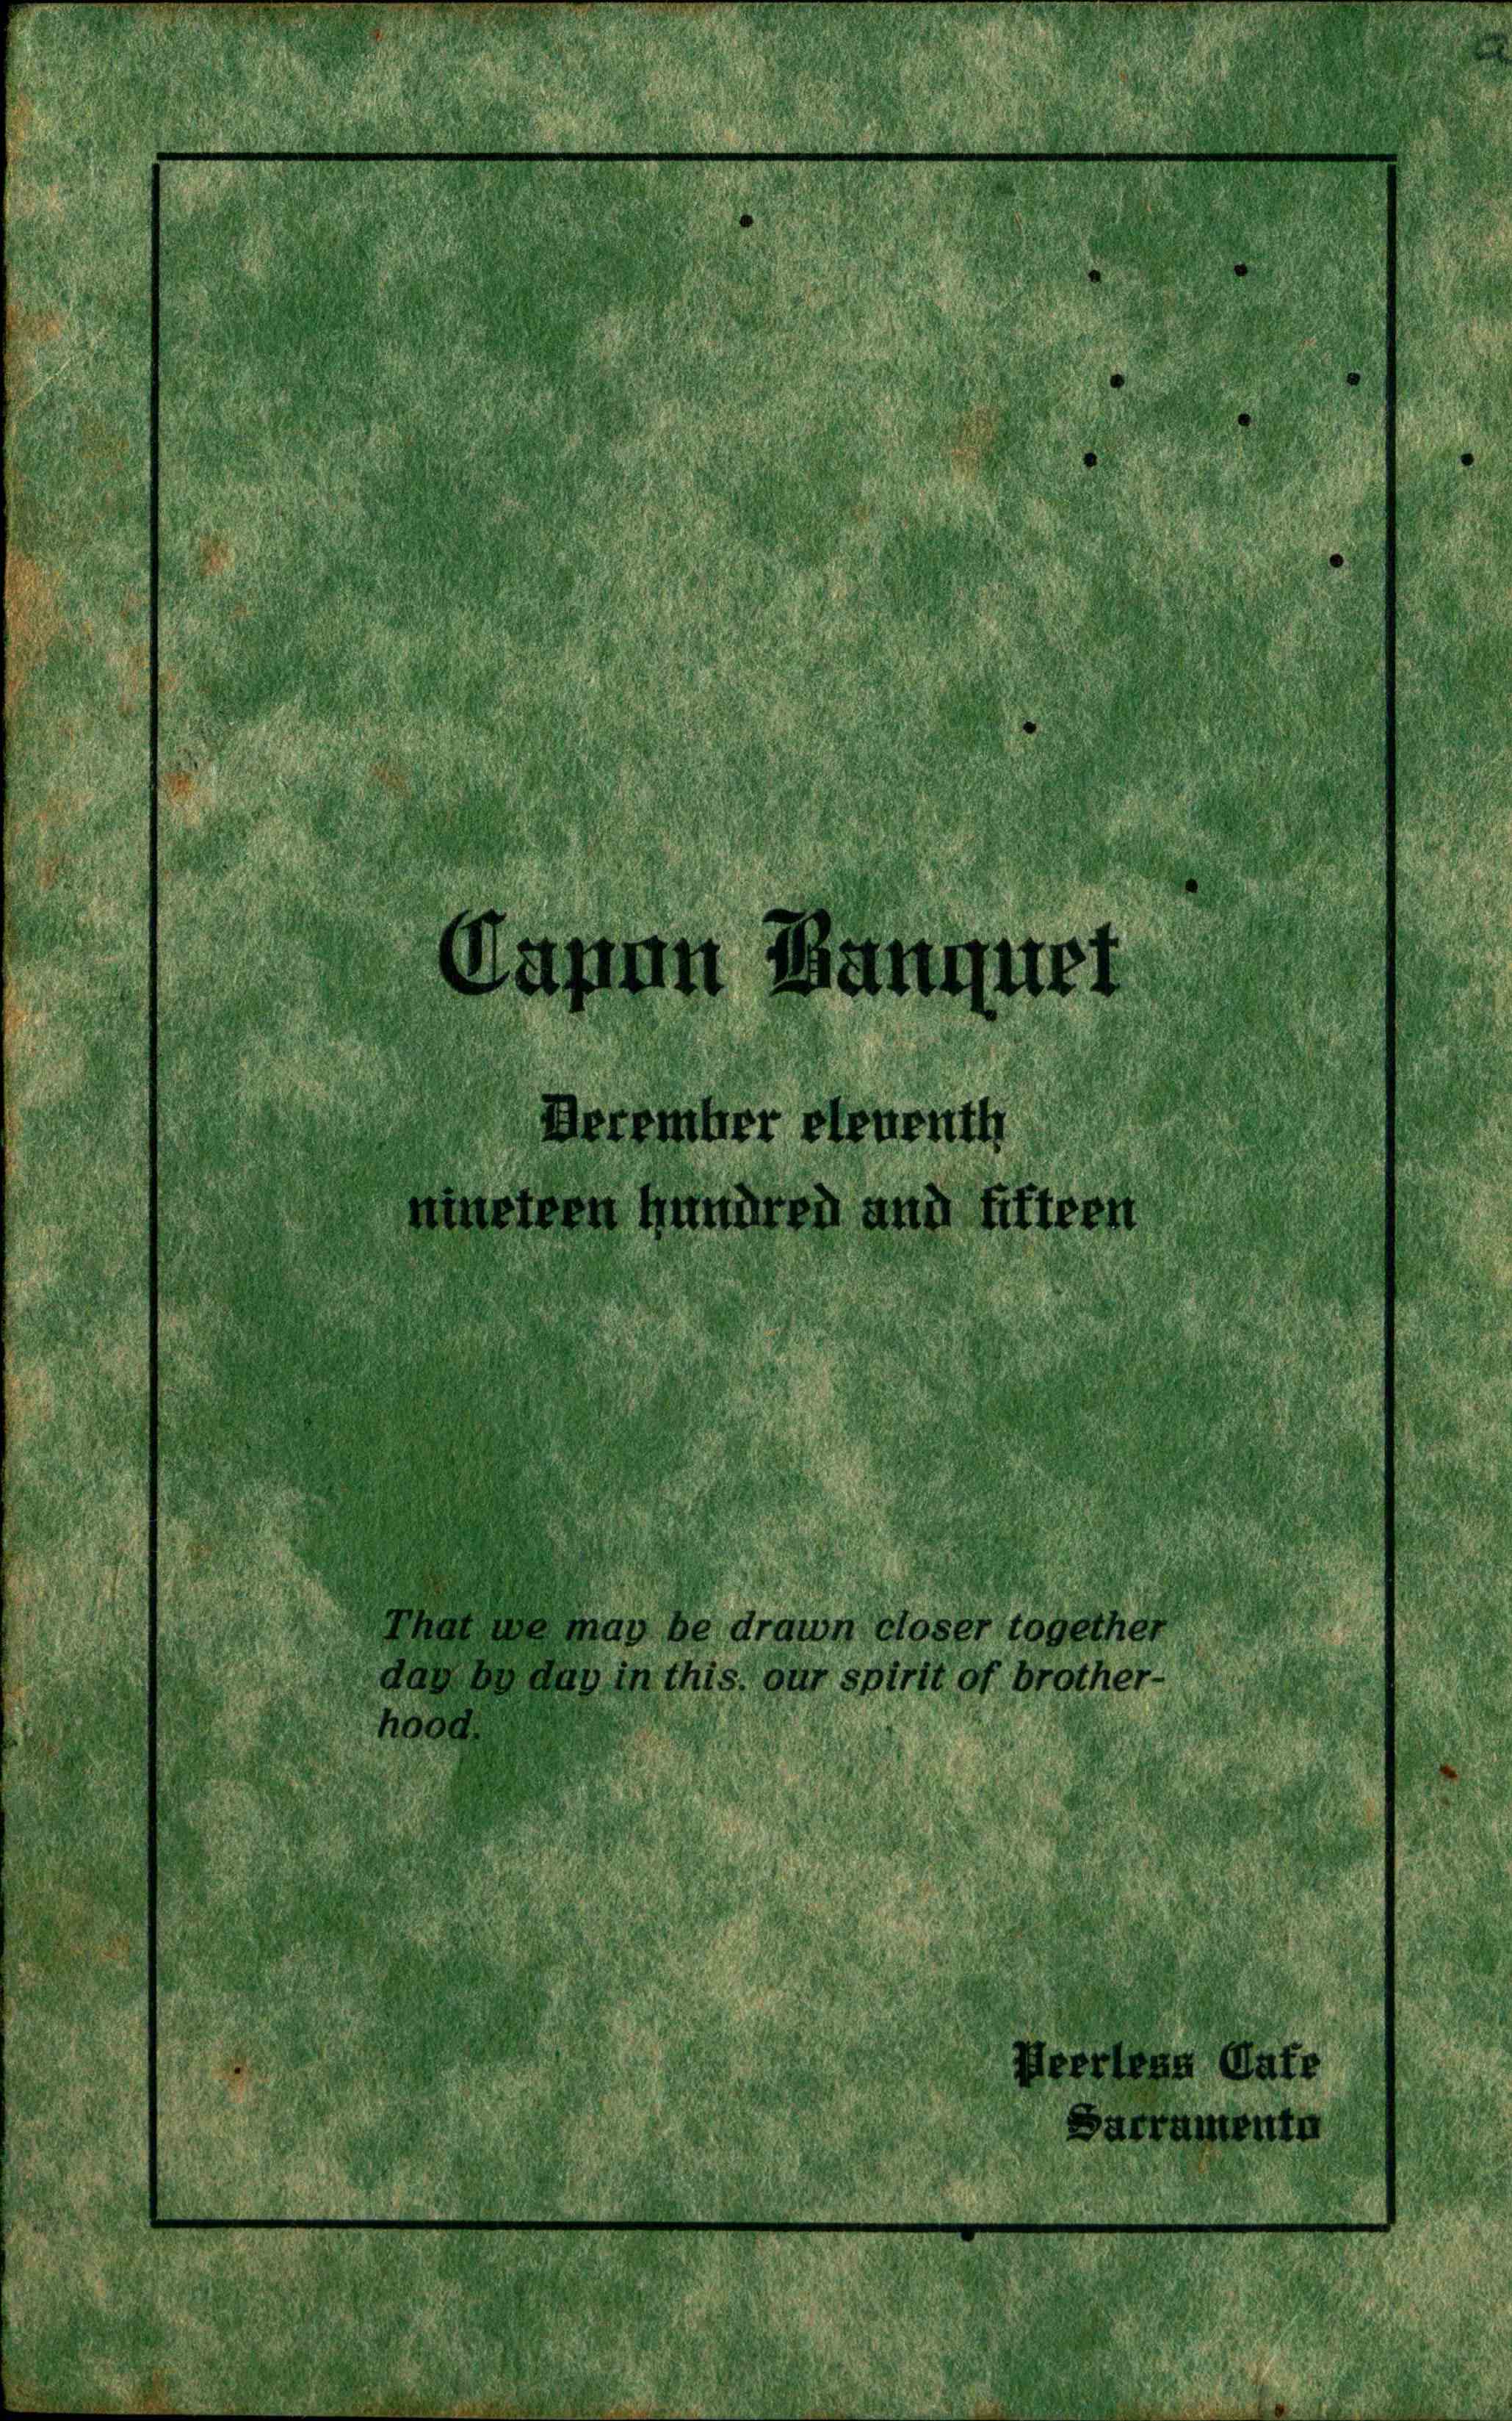 Capon Banquet